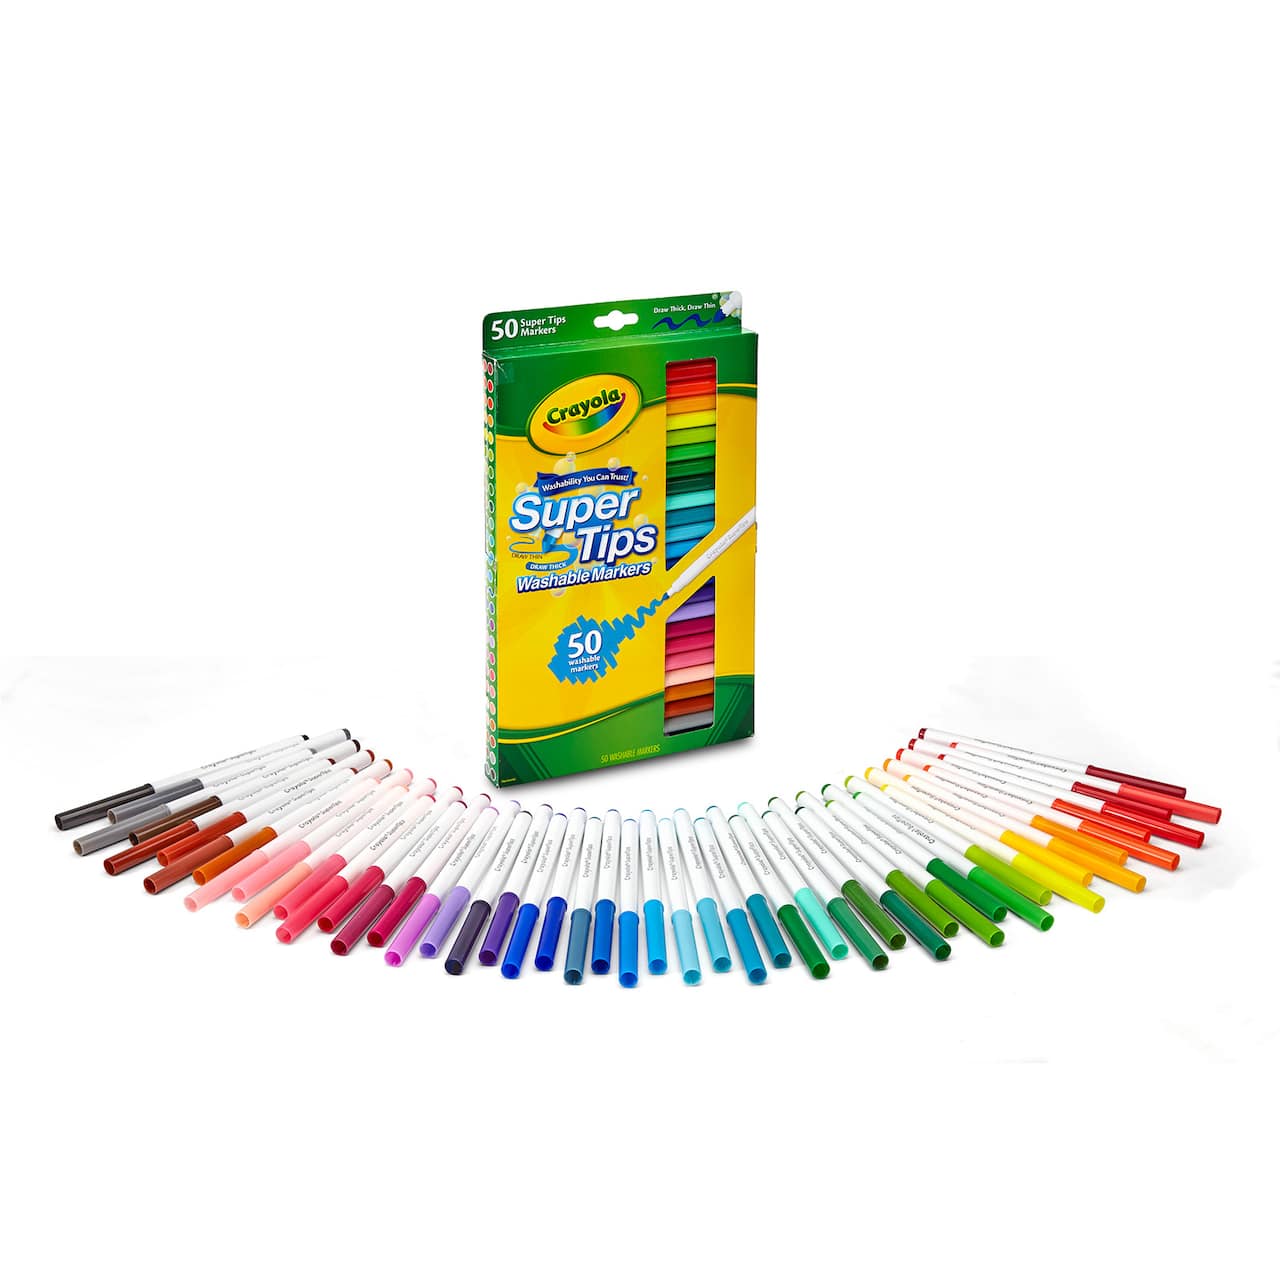 Crayola Super Tips Washable Markers, 50ct.